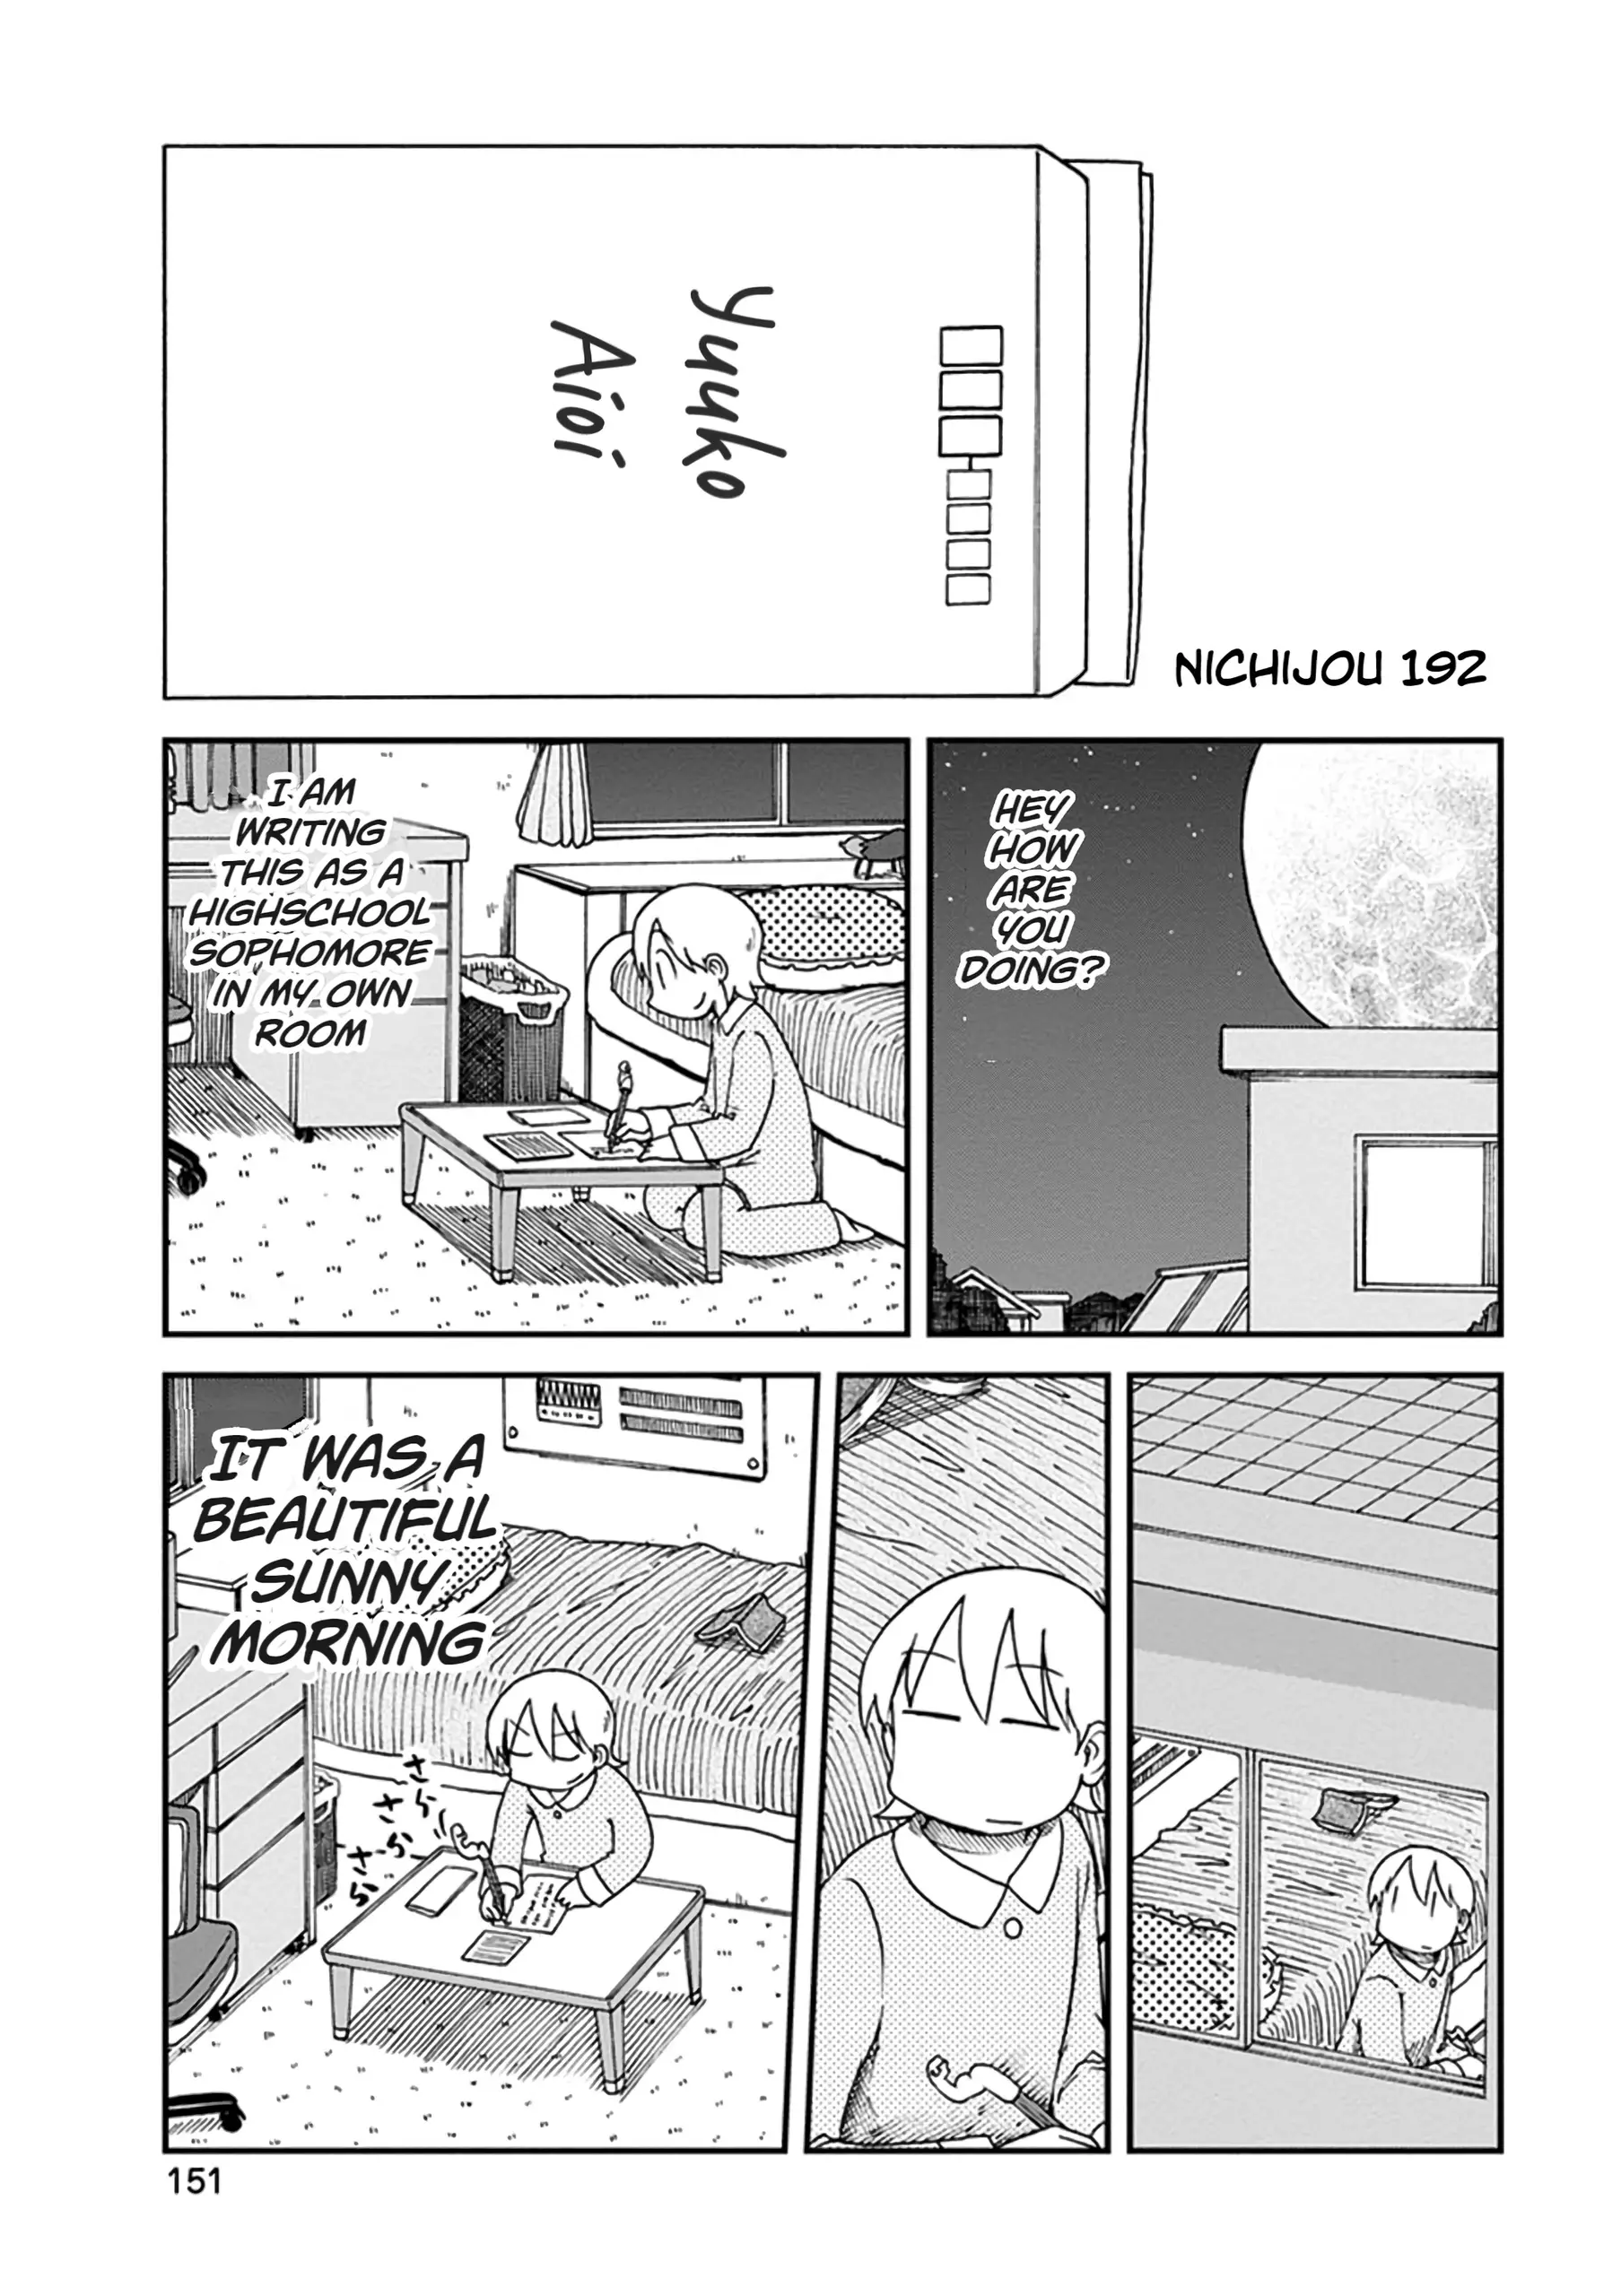 Nichijou - 192 page 1-93c7c939